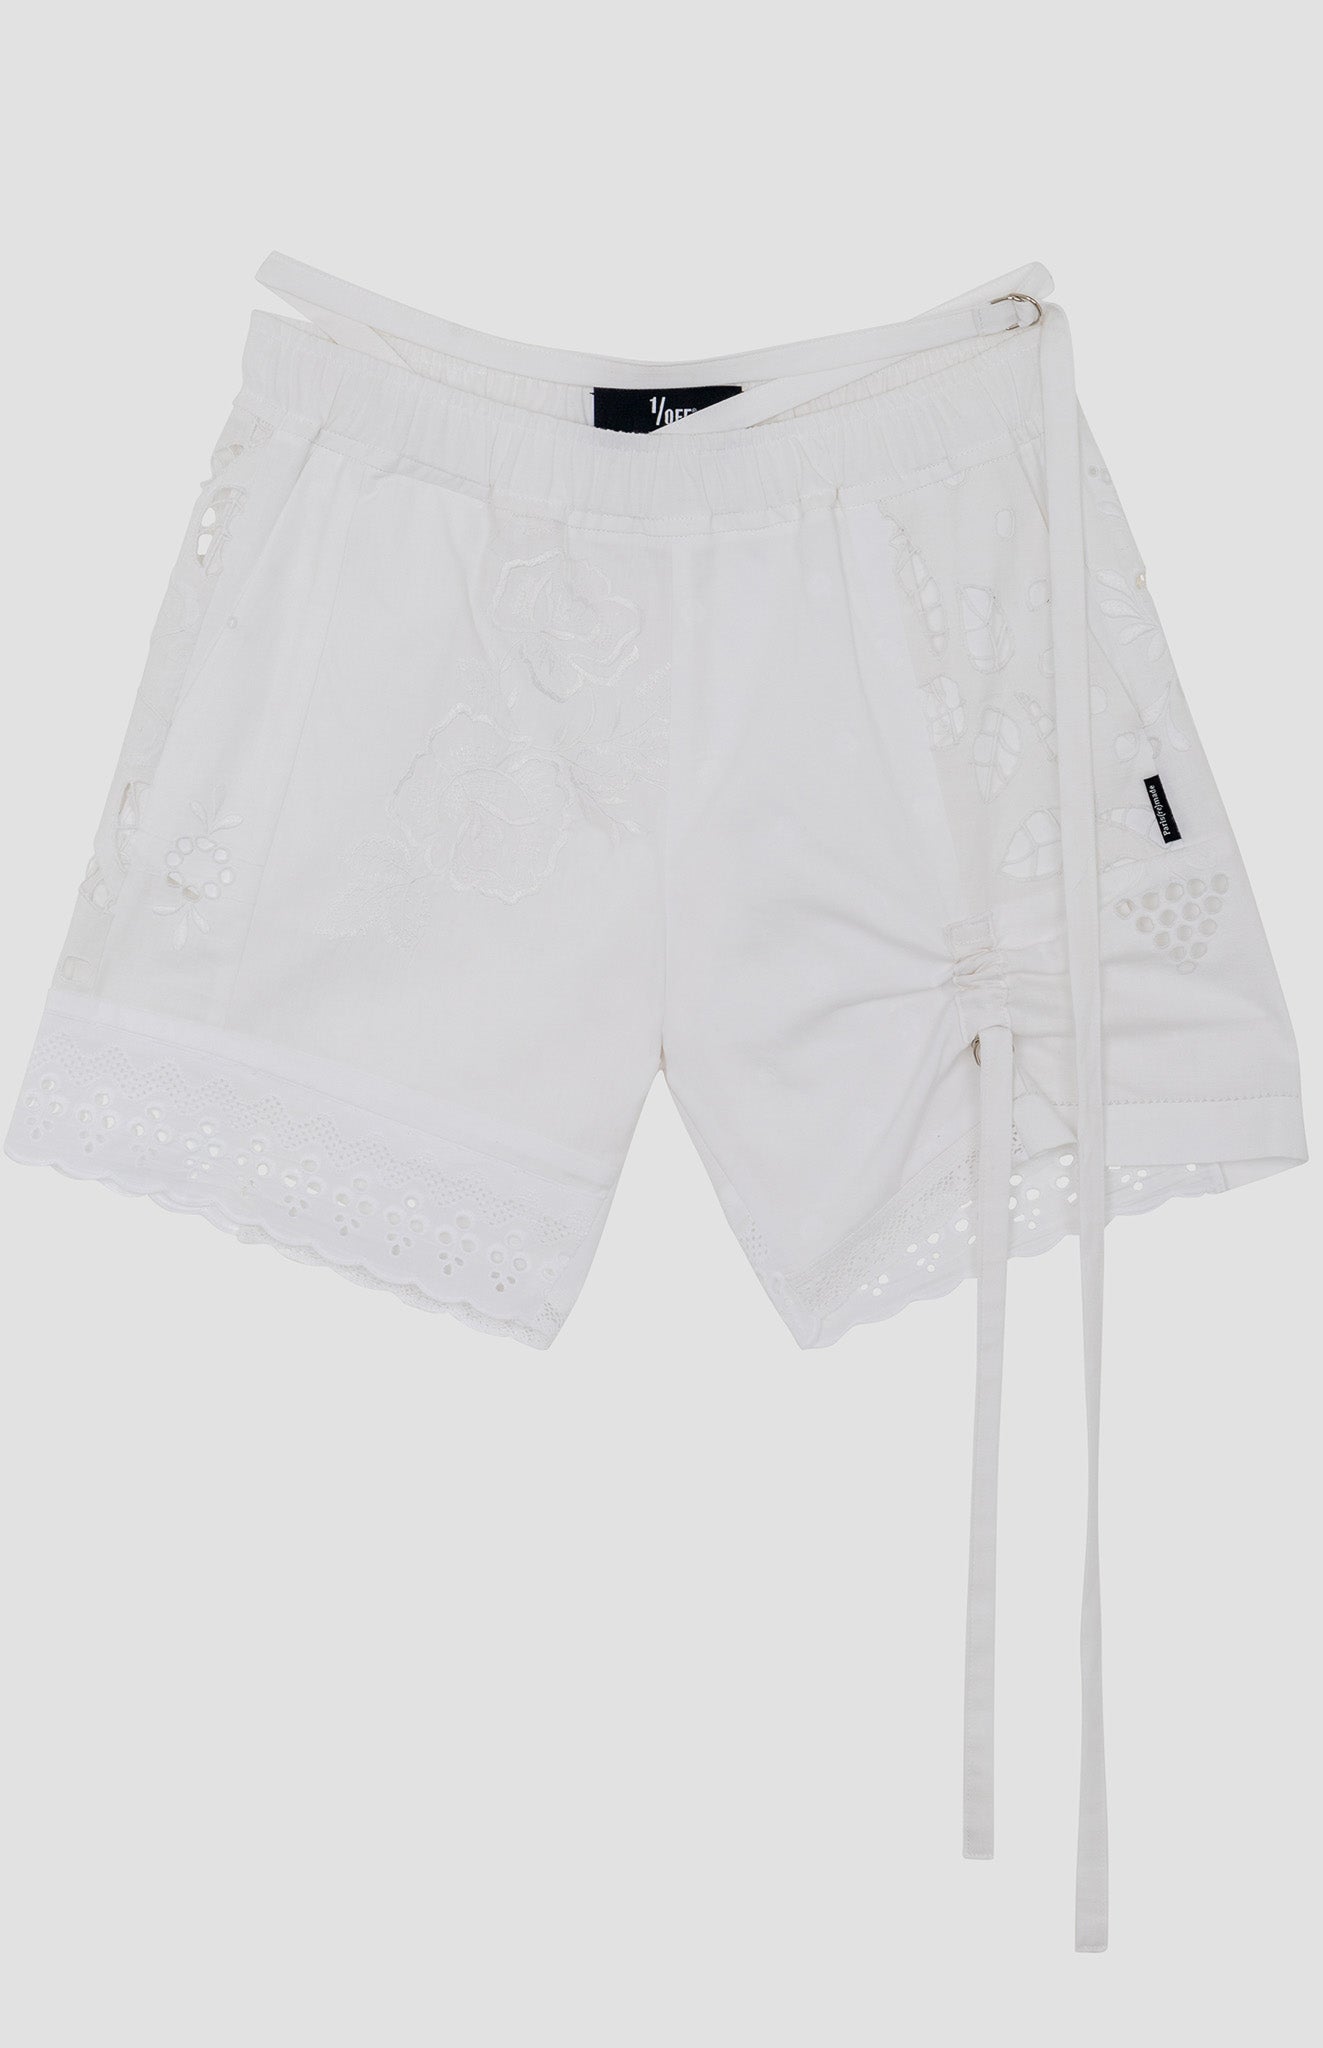 1OFF-Paris-Hue-Pants-Table-Cloth-Shorts-01 (front)